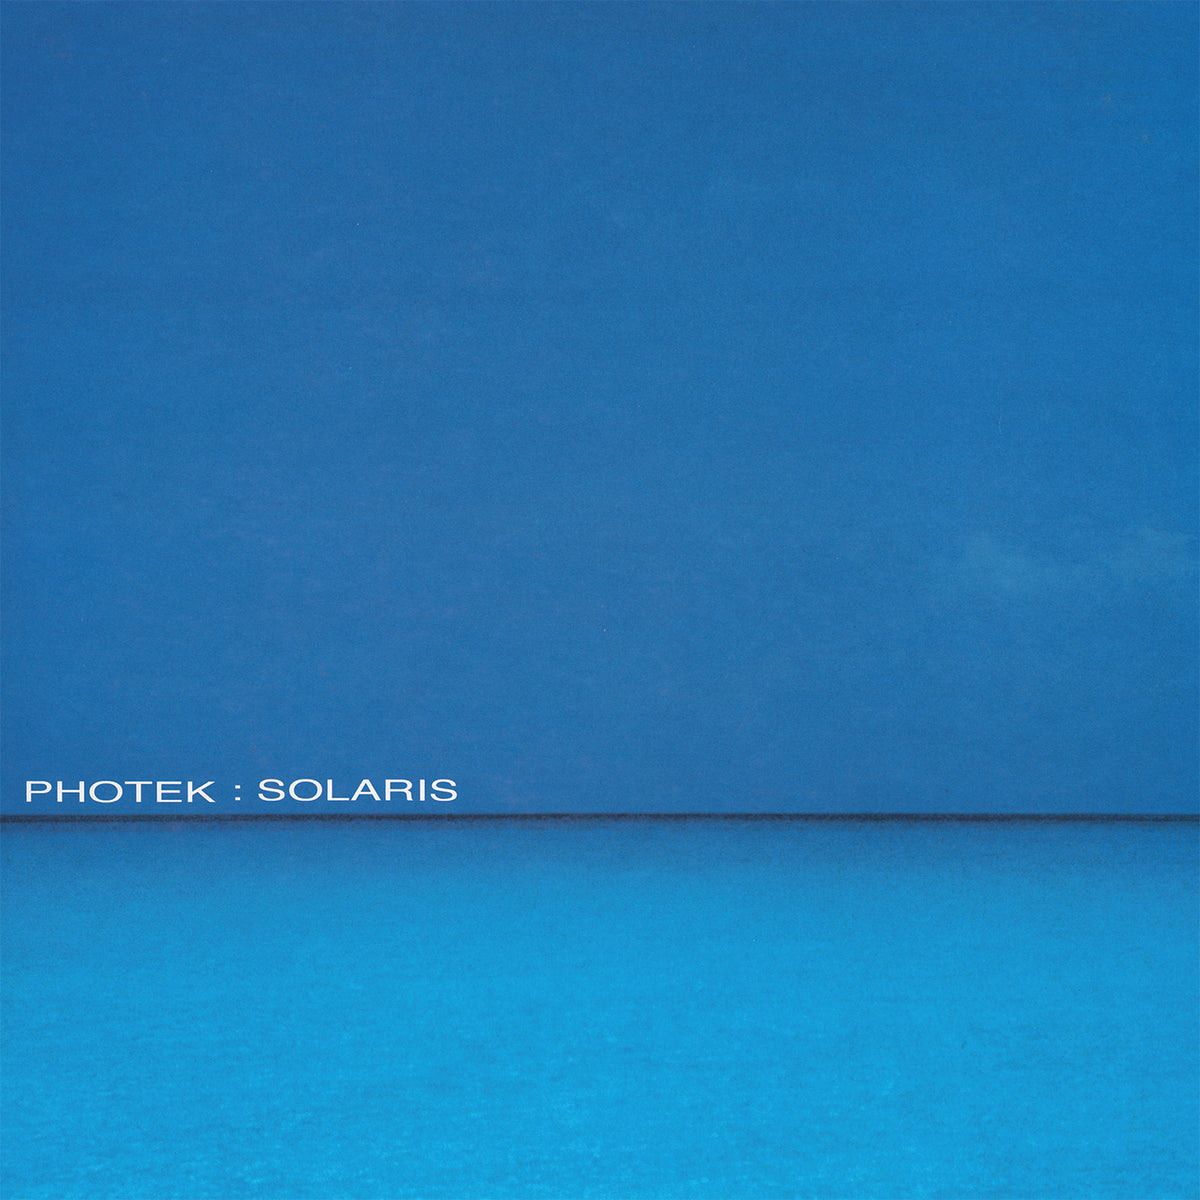 <p>Solaris by Photek on Proper Records</p>